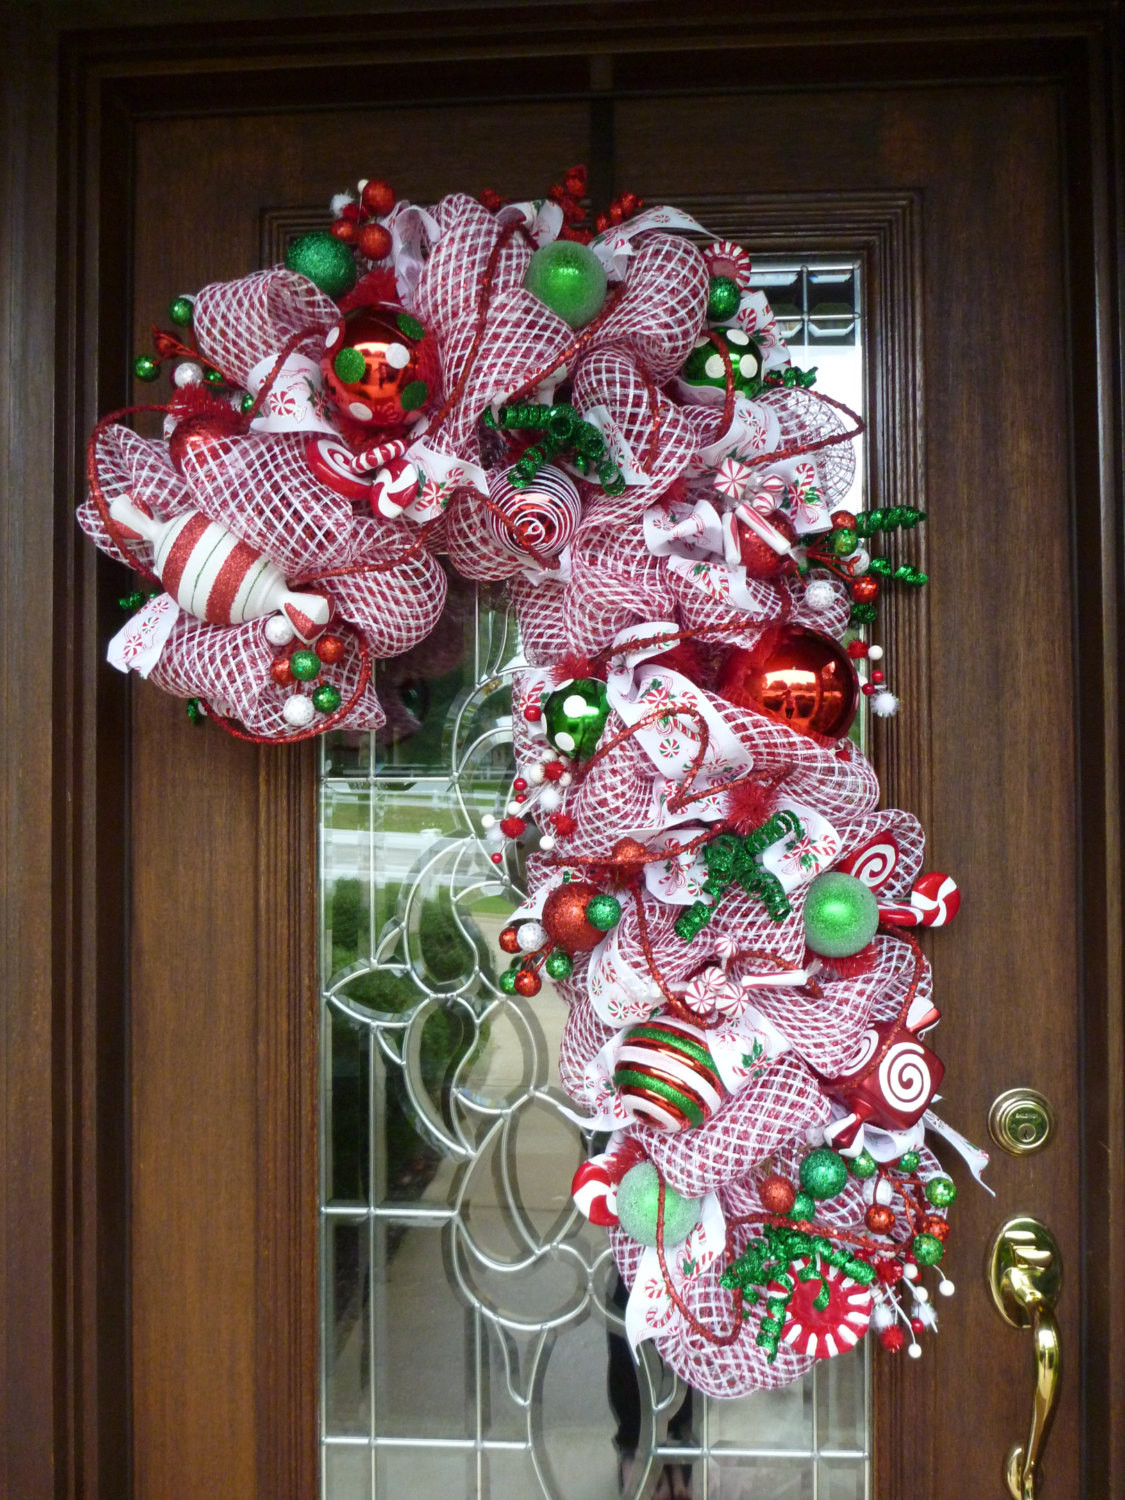 Candy Cane Christmas Wreath
 Deco Mesh CANDY CANE CHRISTMAS Wreath